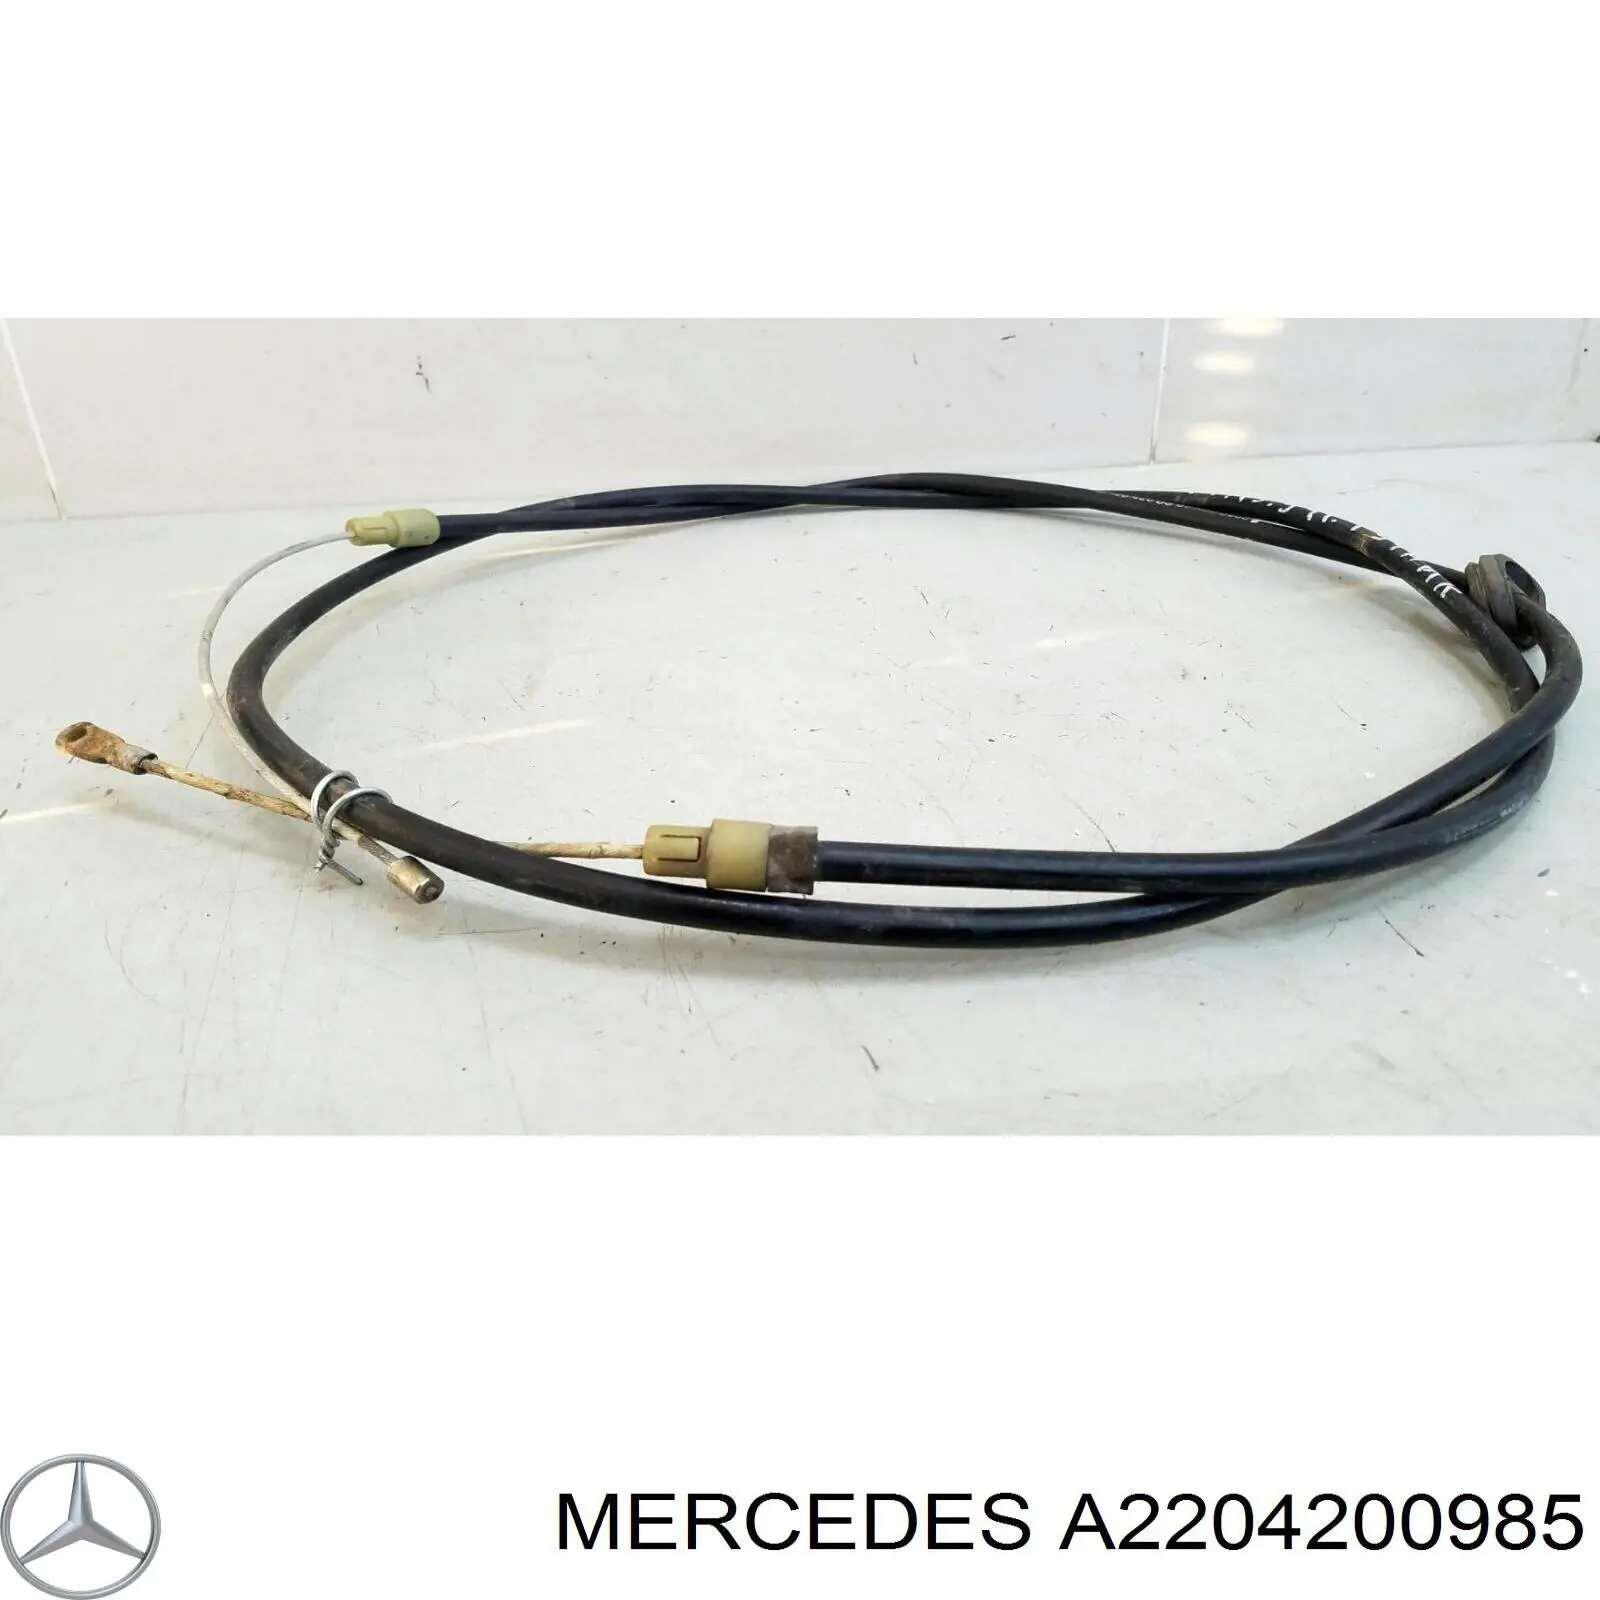 A2204200985 Mercedes cable de freno de mano delantero